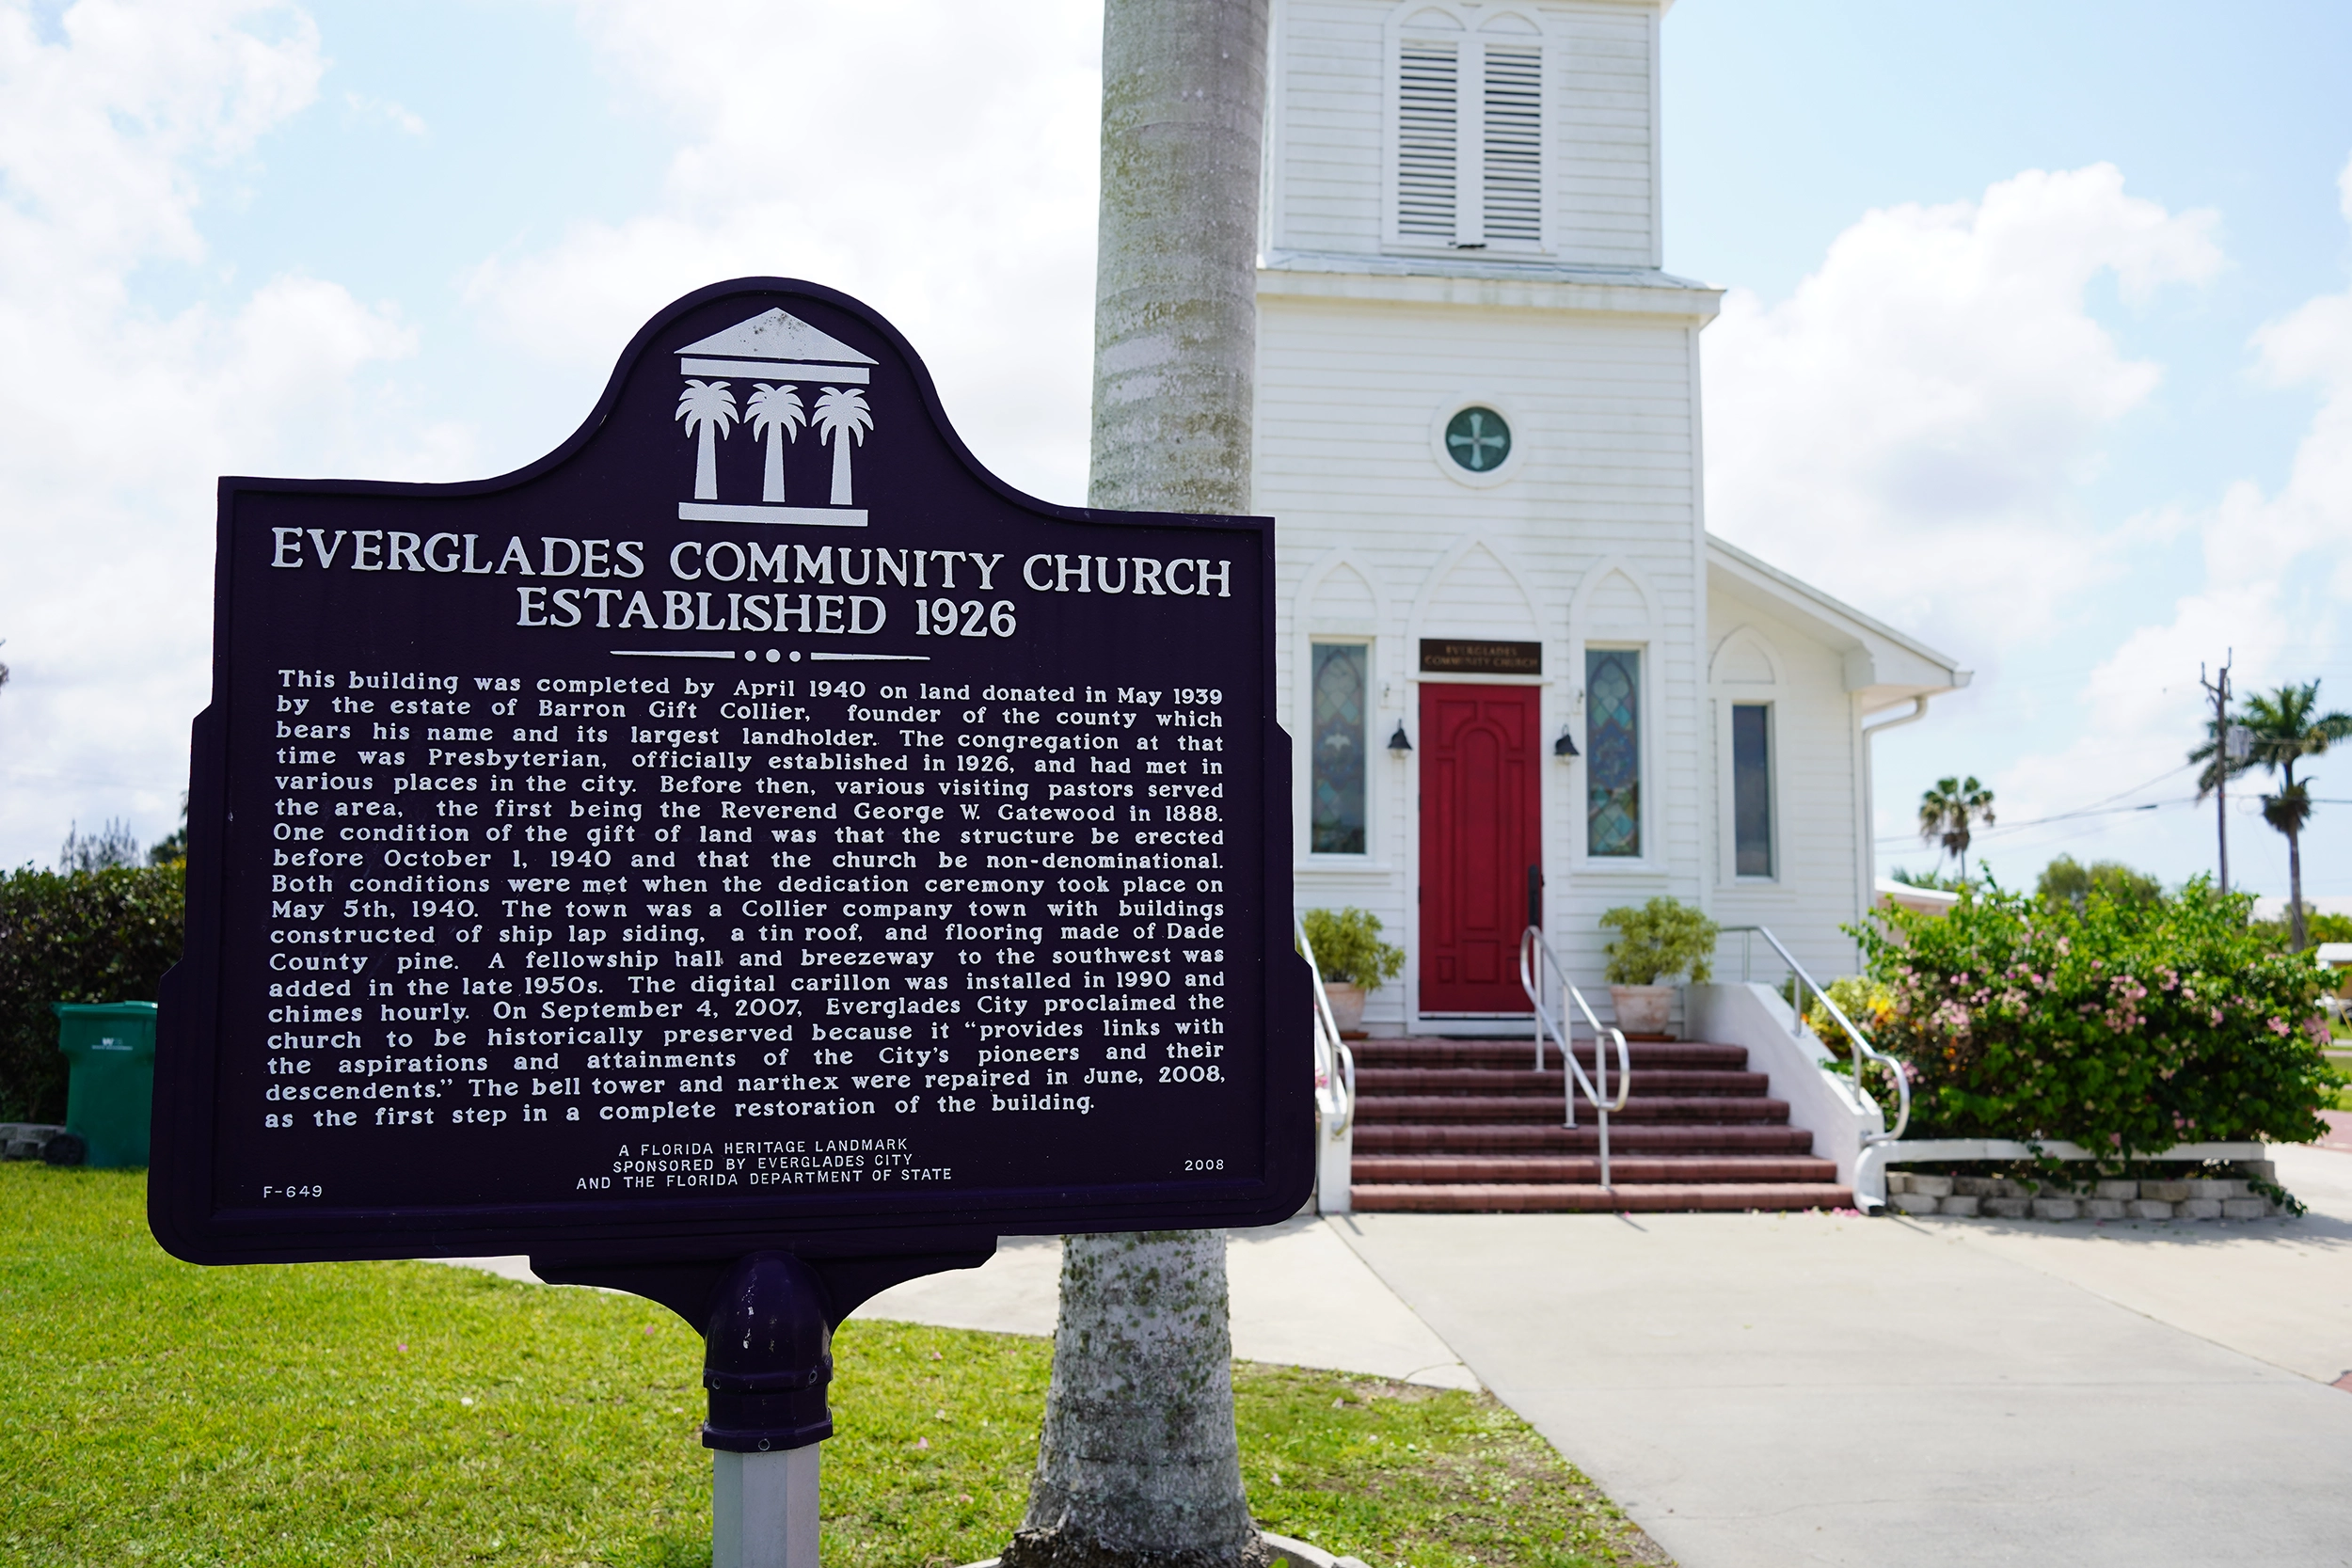 Everglades Community Church Everglades City copy right Denise Wauters